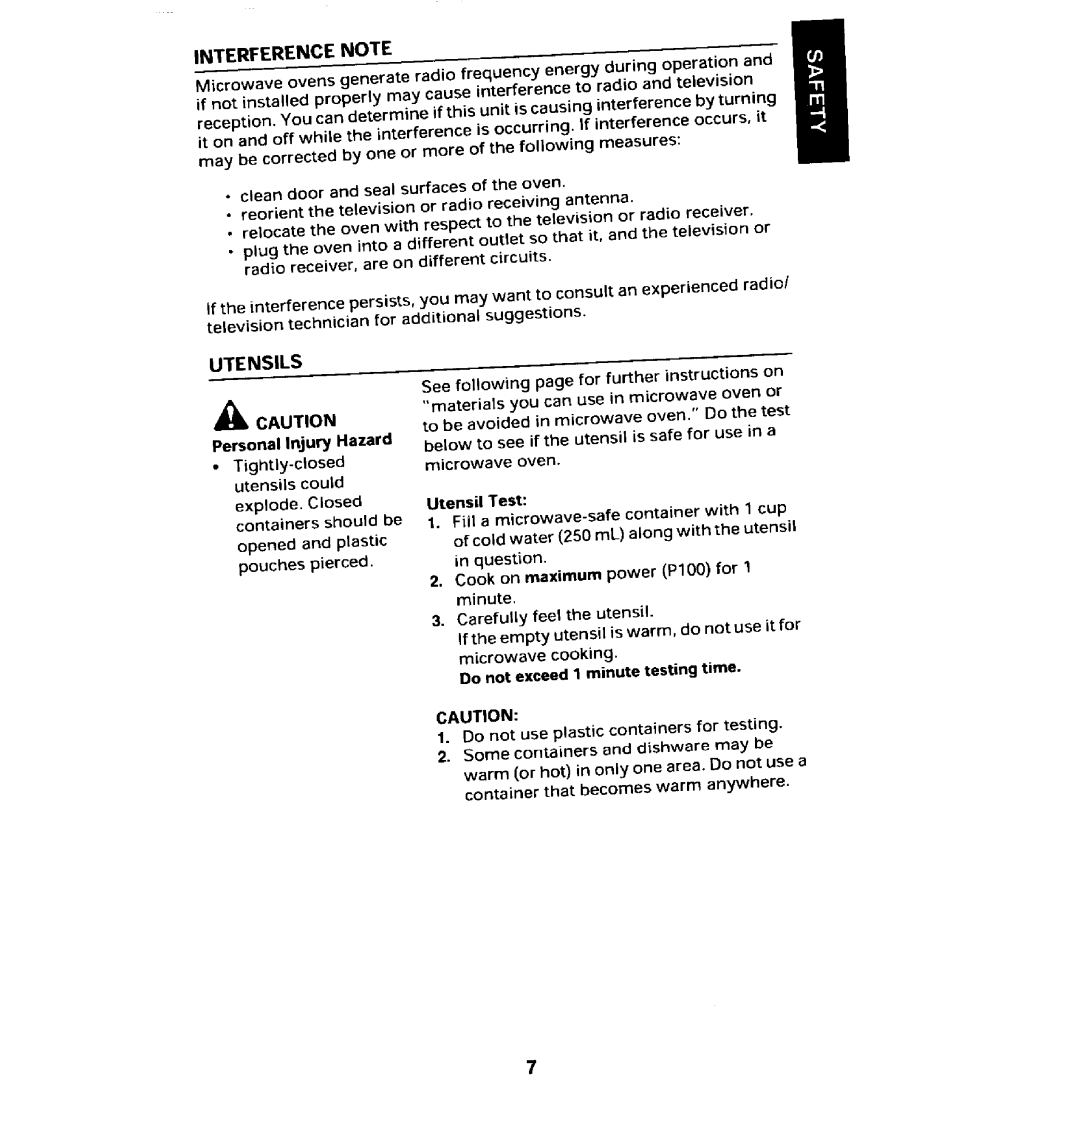 Maytag MMV5100AA manual Interference Note, UTENSILS ACAUTION Personal Injury Hazard, Utensil Test 